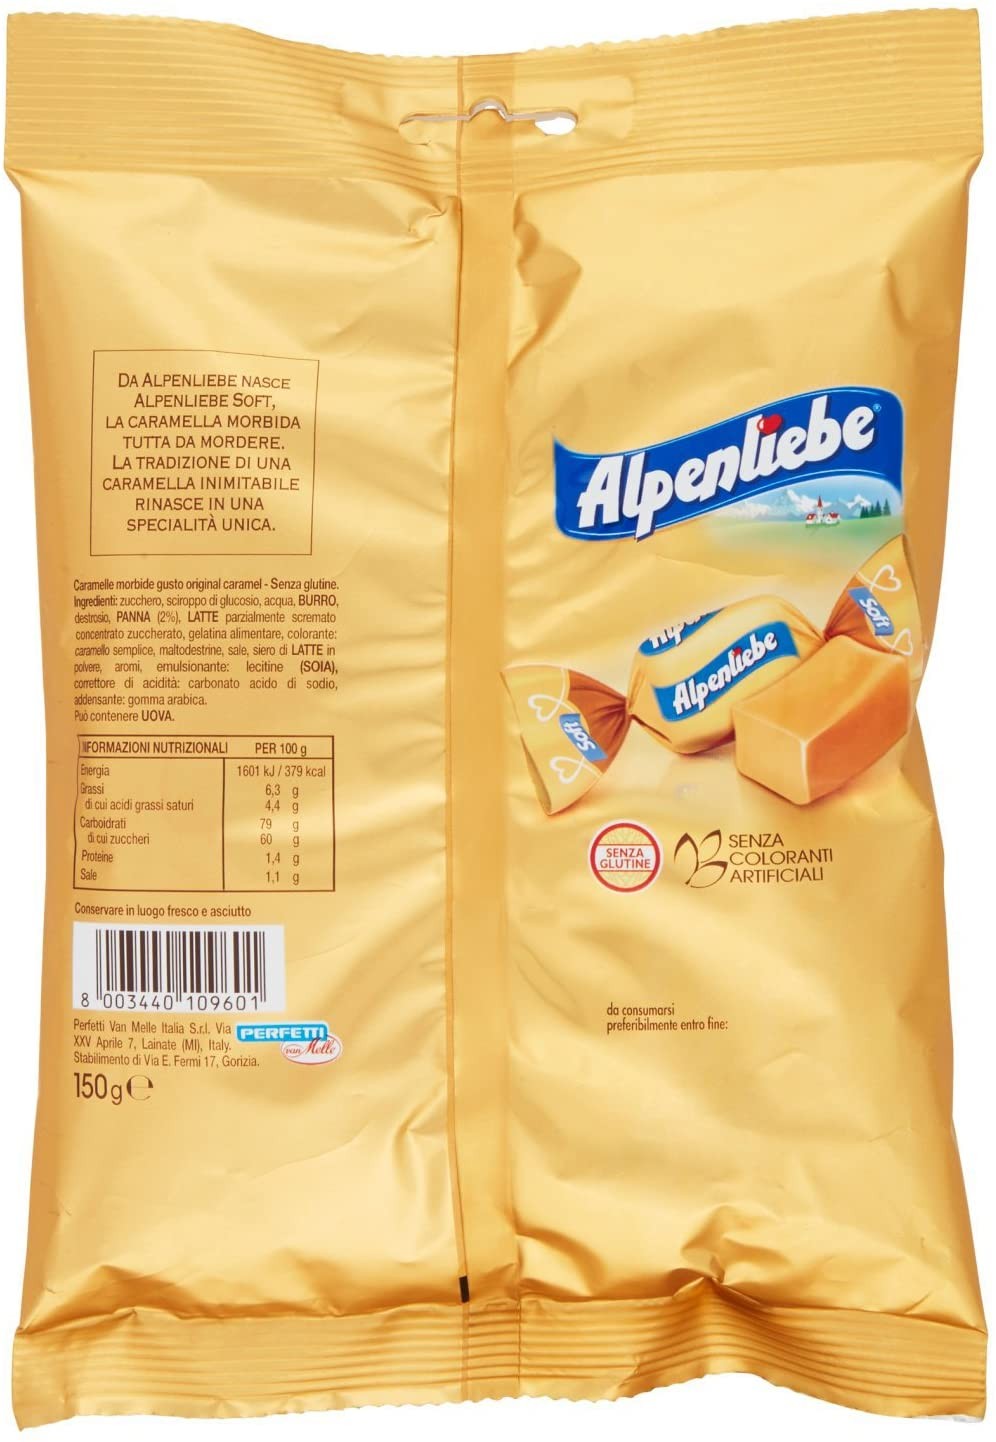 Alpenliebe Soft, Caramelle Moribide Gusto Original Caramel, Caramella Toffee al Caramello, Confezione da 6 buste da 150 gr, Senz